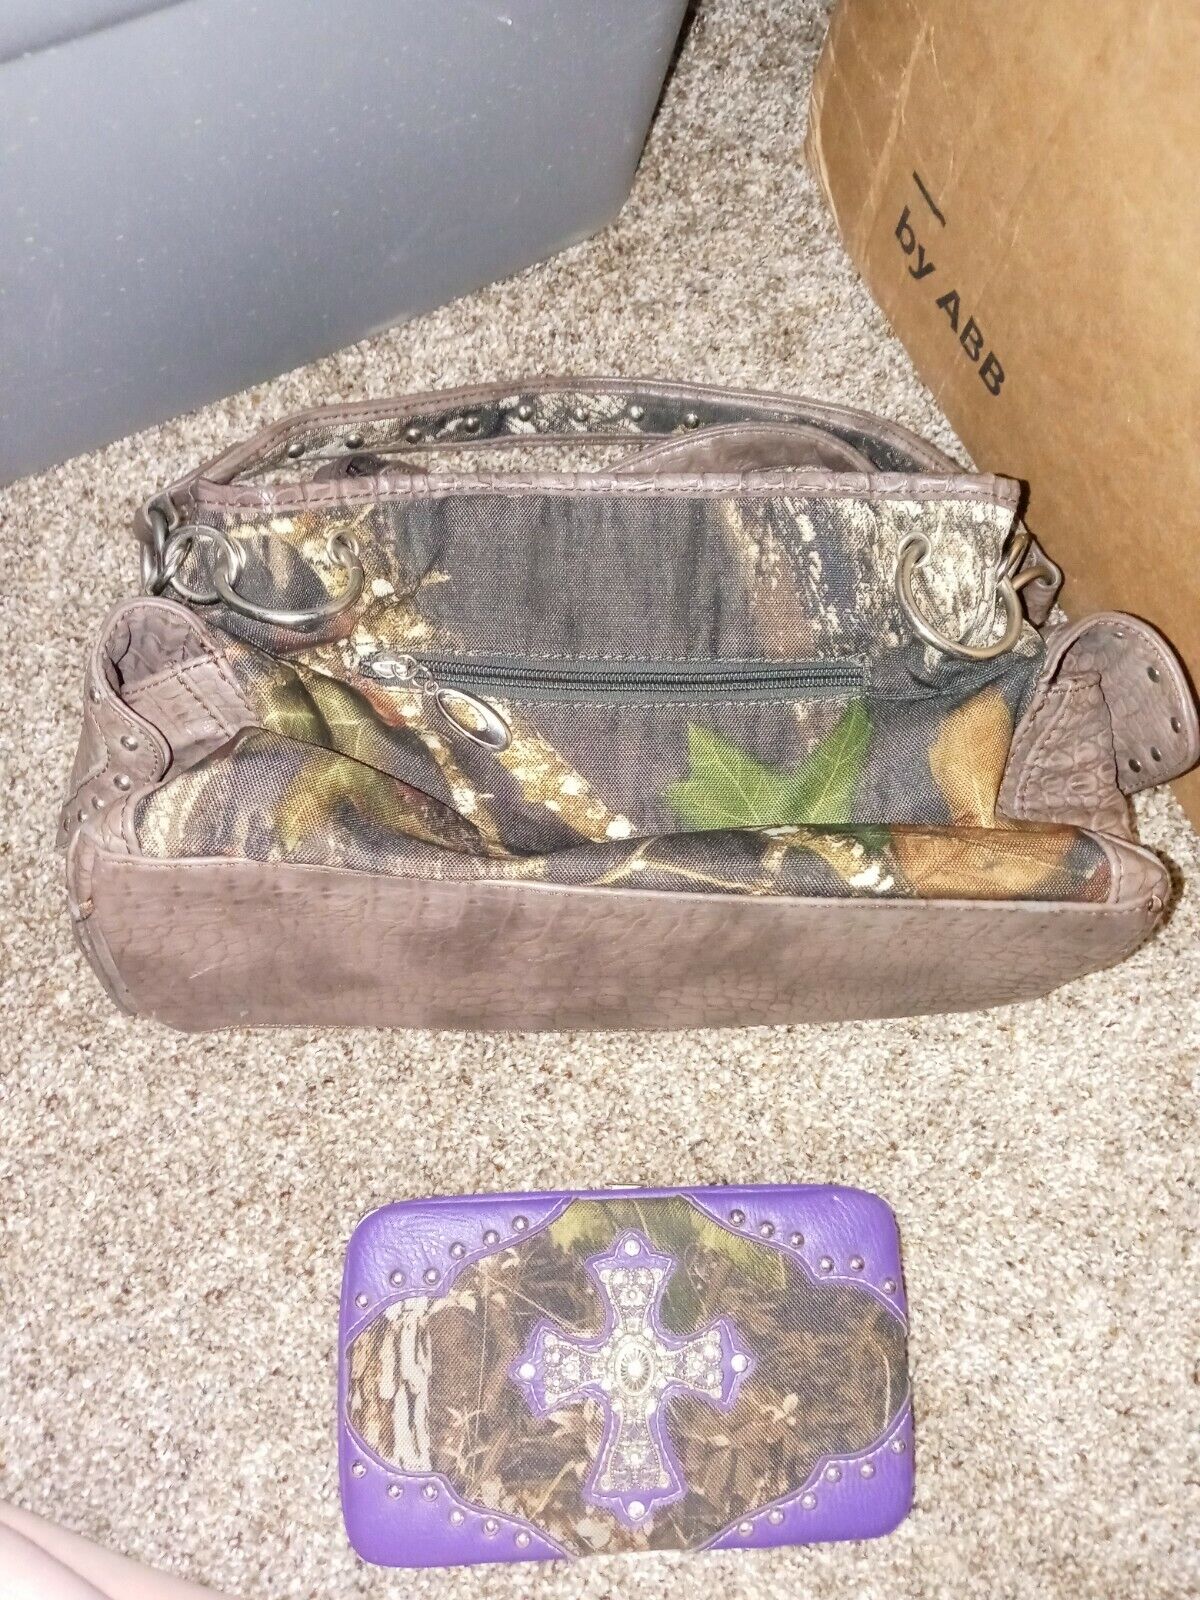 Camo purse and wallet - image 2